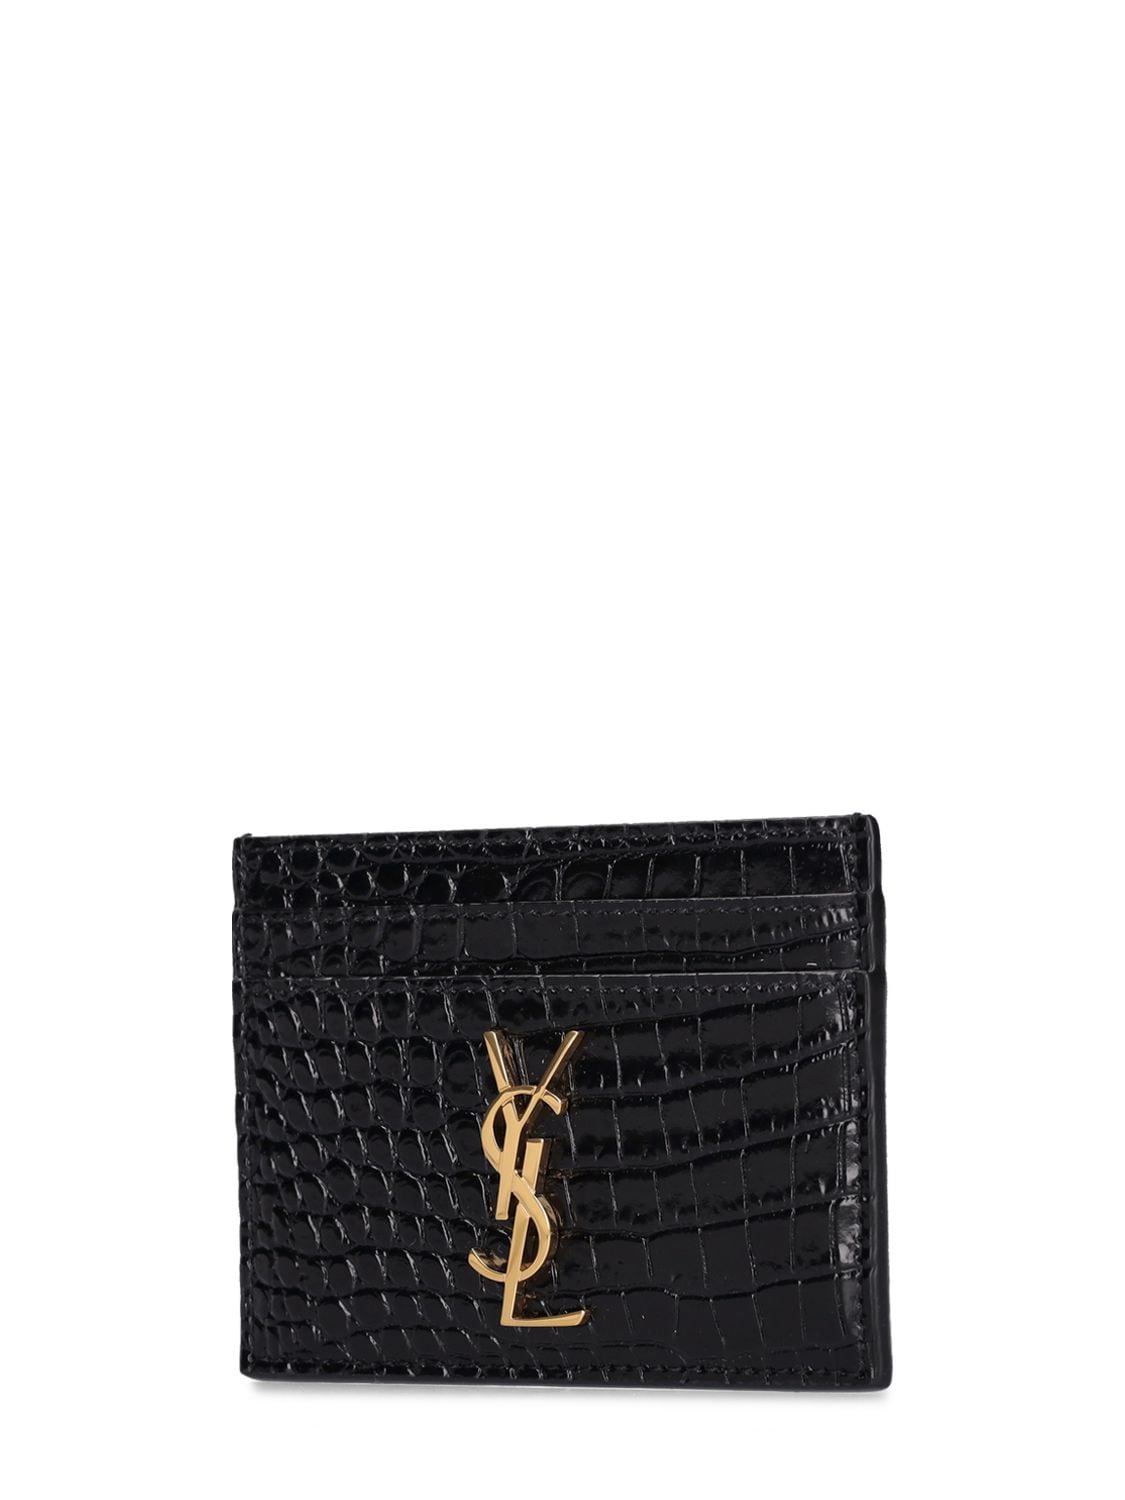 Black YSL-monogram leather cardholder, Saint Laurent